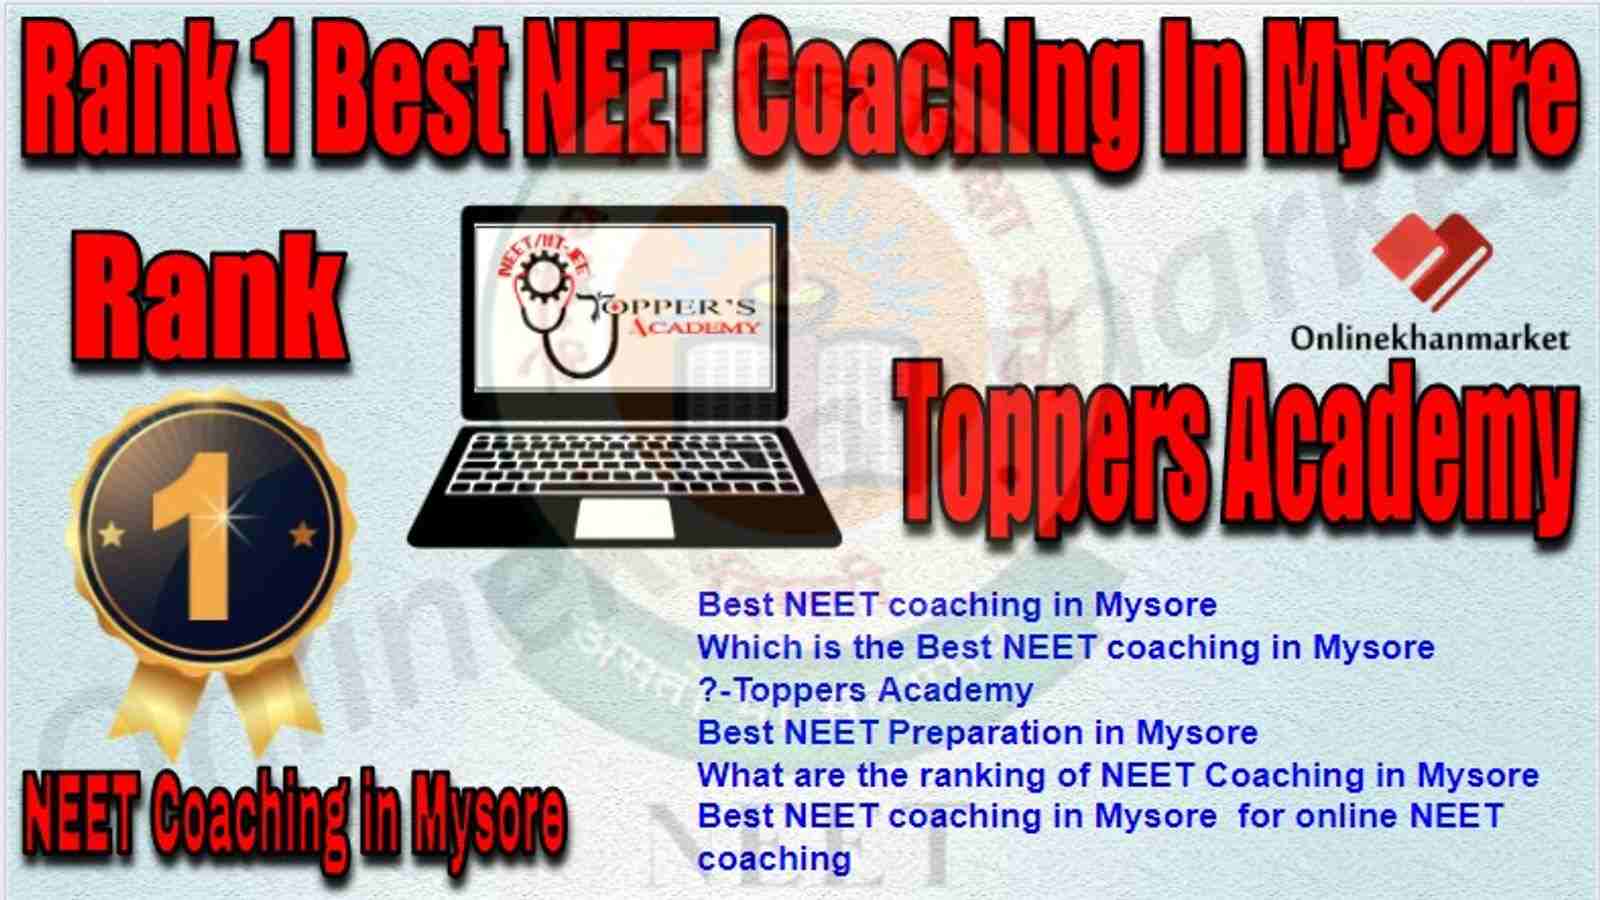 Rank 1 Best NEET Coaching Mysore